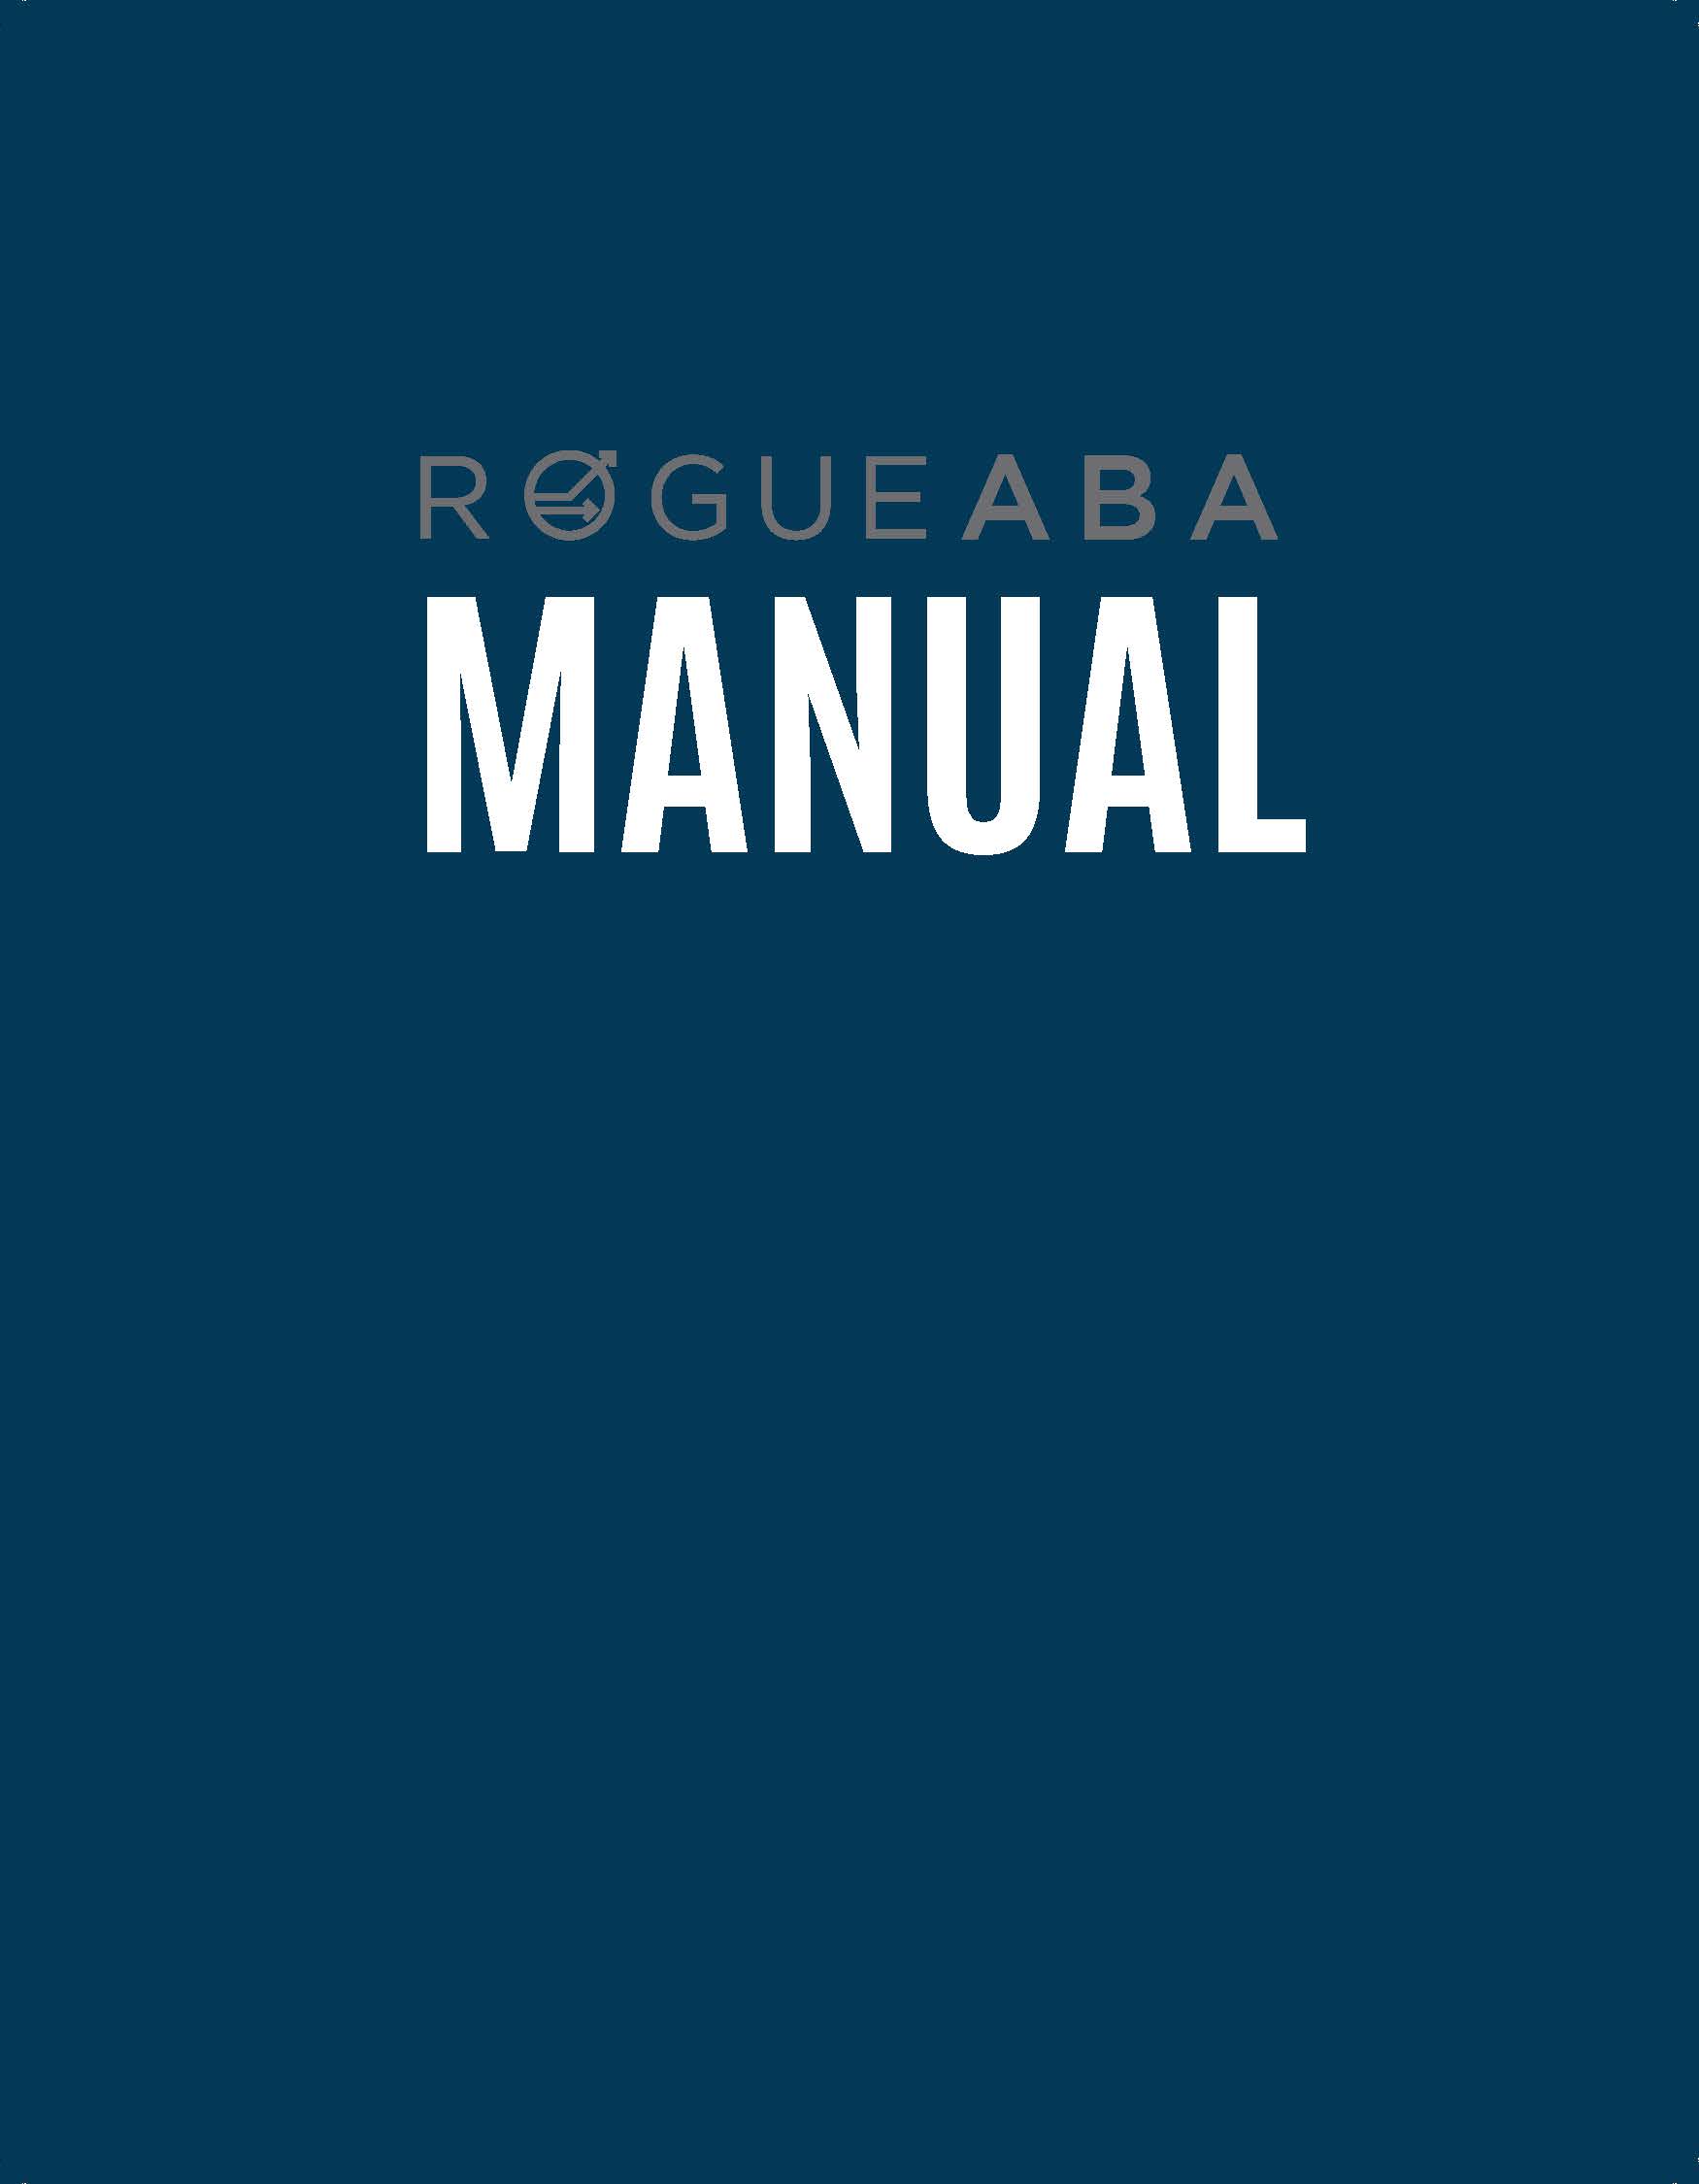 Rogue ABA Manual (5th Edition Task List)